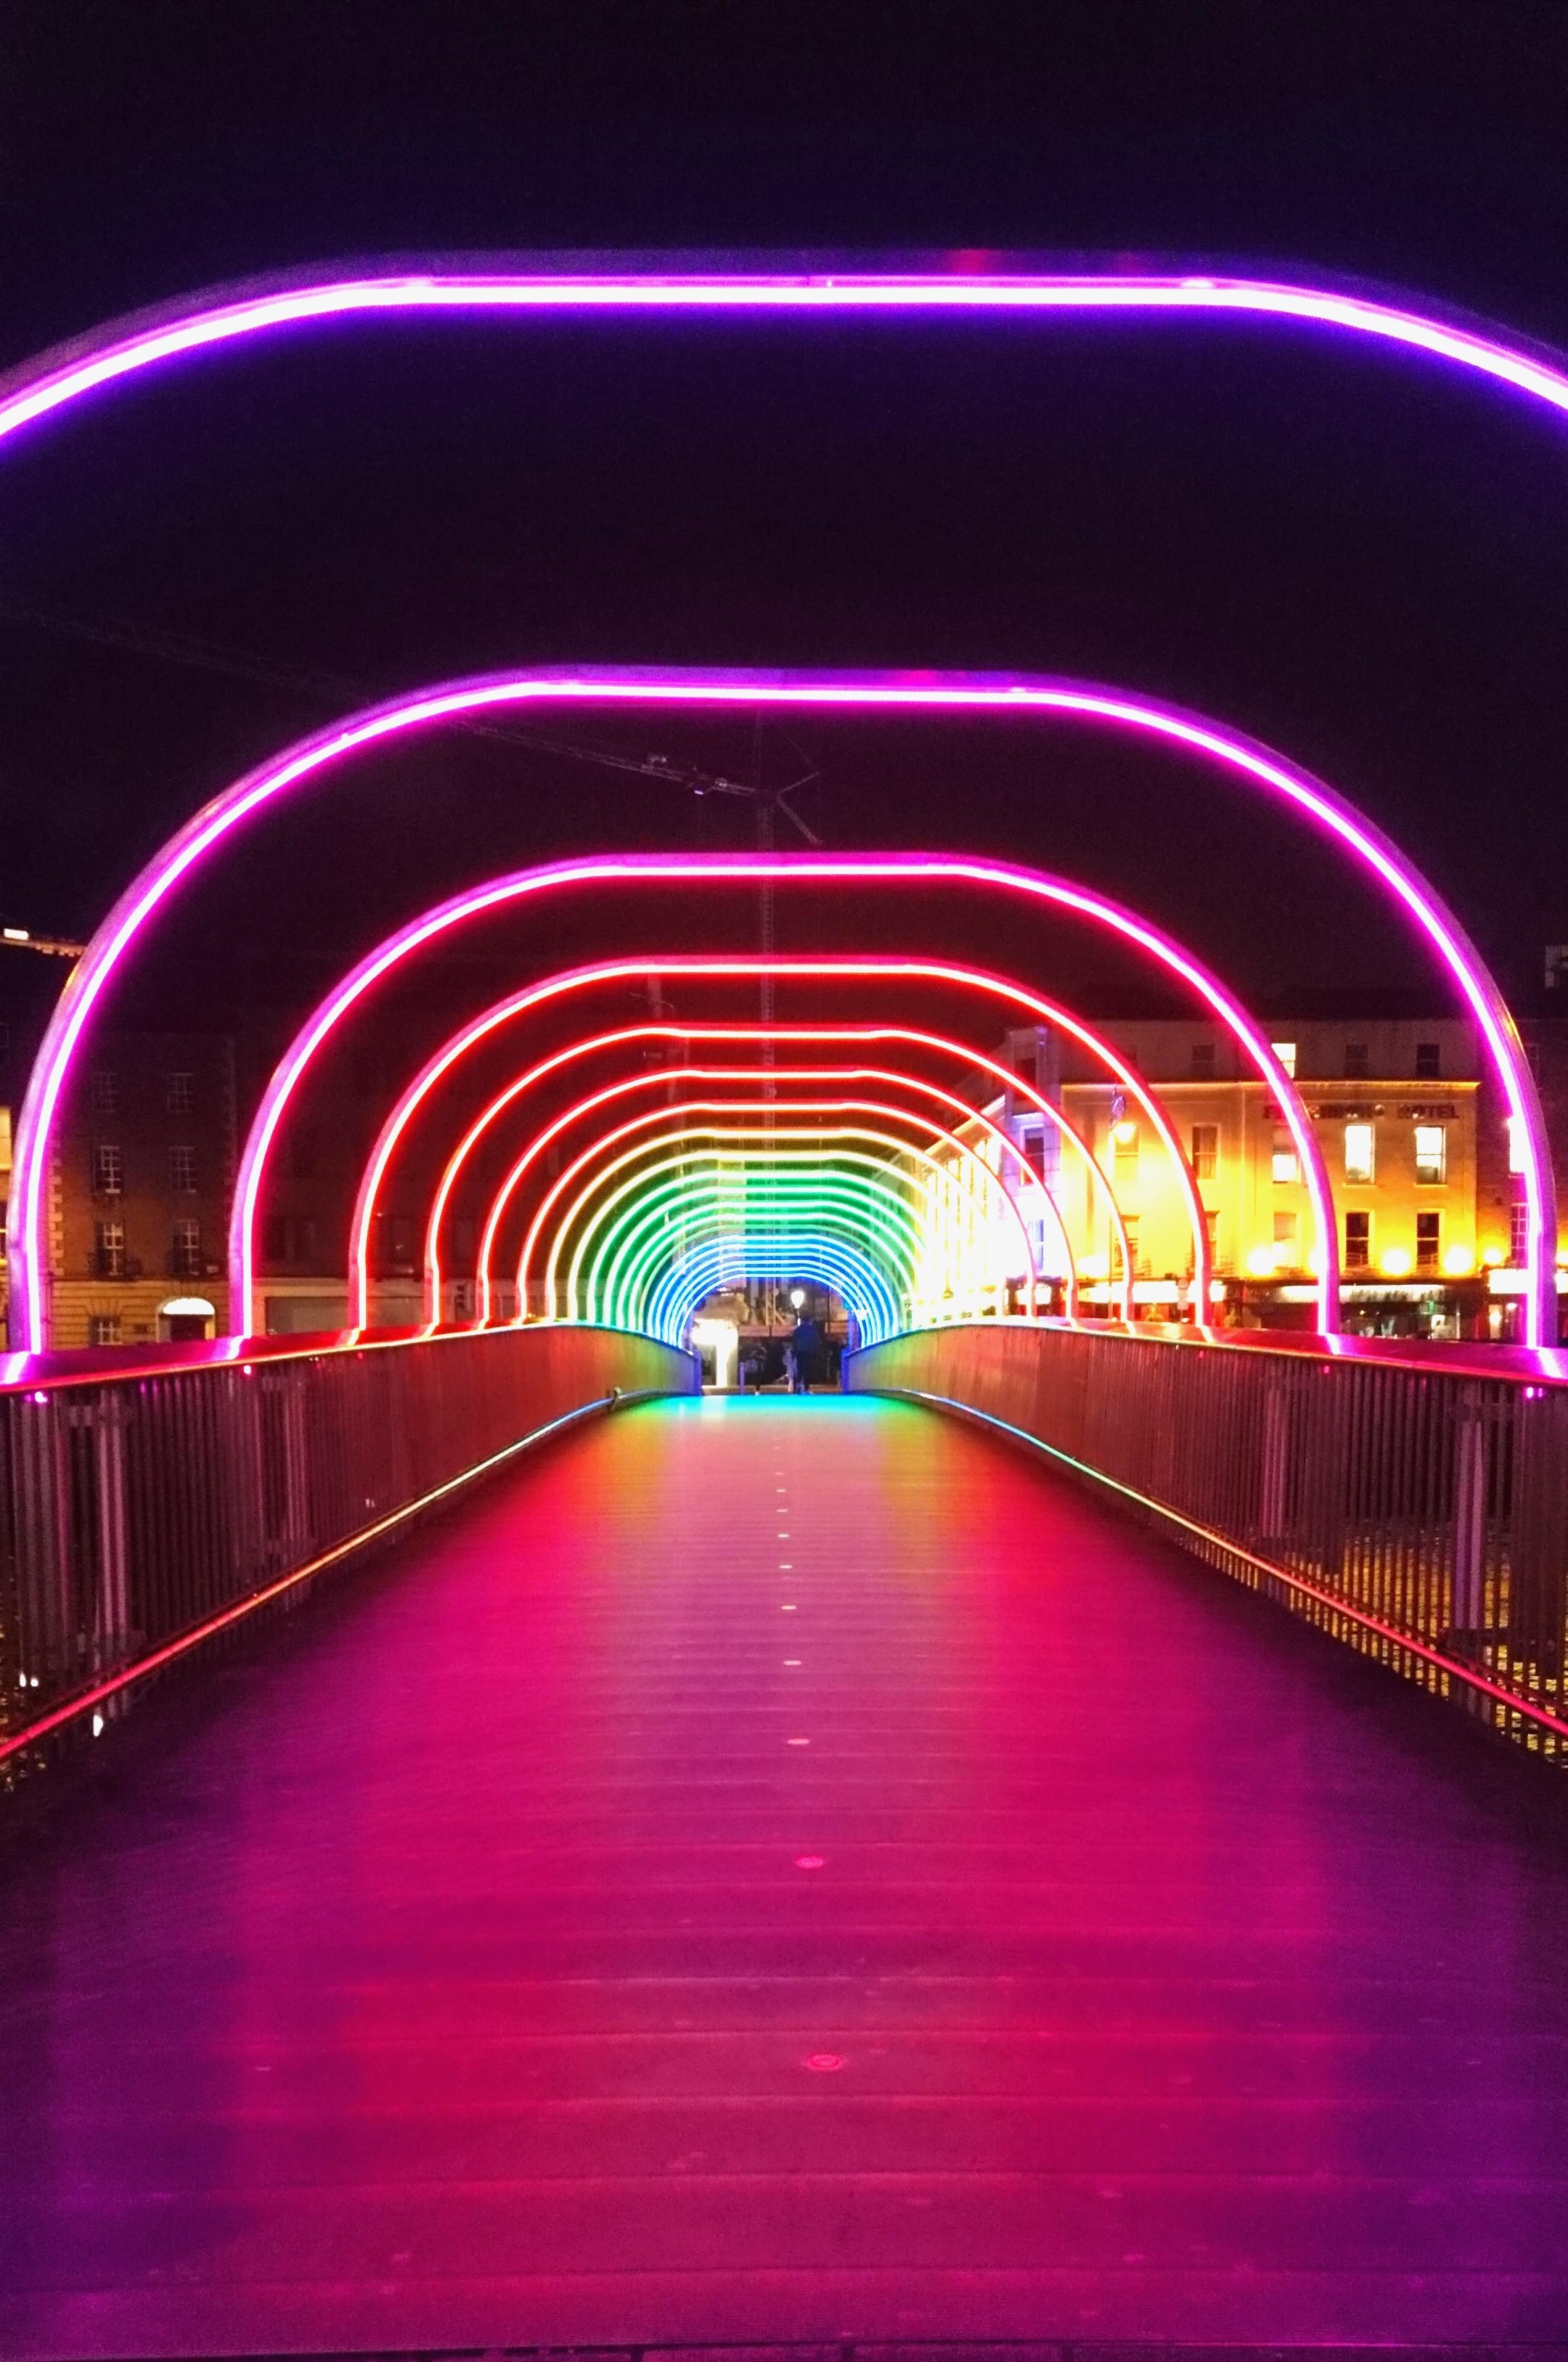 Meet me under the rainbow 🦄🍭🌈
#dublin #städtetrip #travel #Urlaub #reise #city 